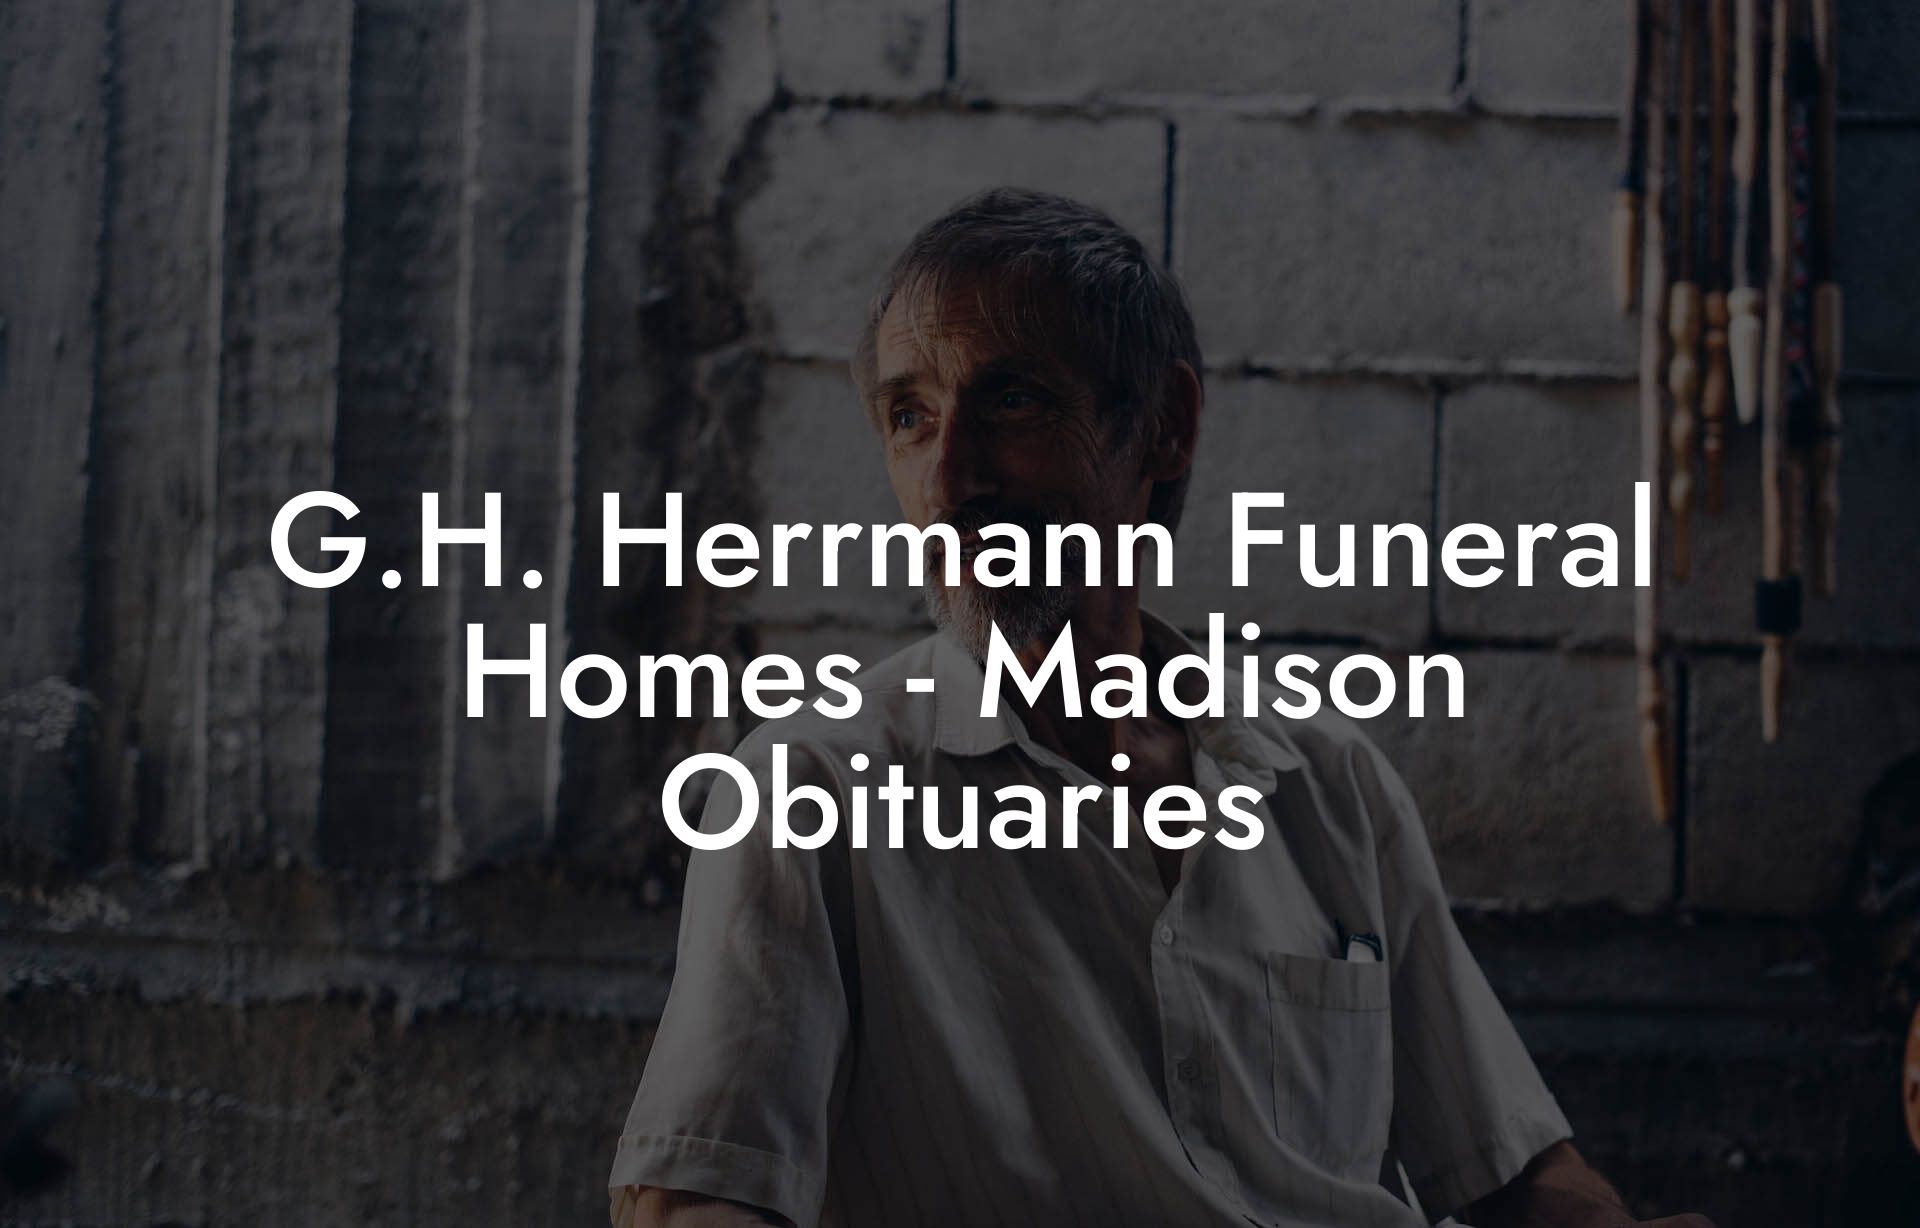 G.H. Herrmann Funeral Homes - Madison Obituaries